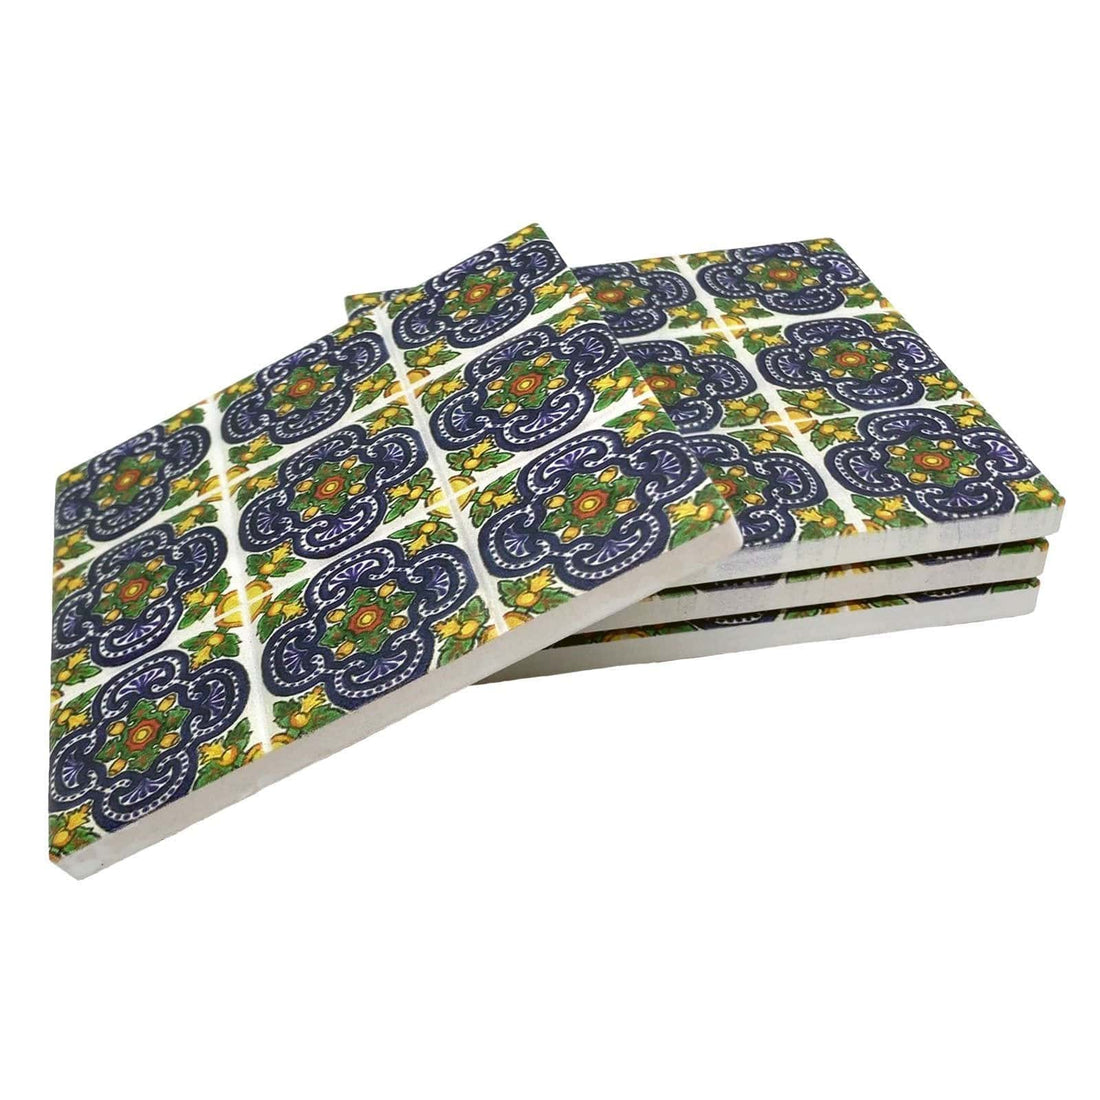 Moroccan Tile Coasters - Design 6 - Set of 4